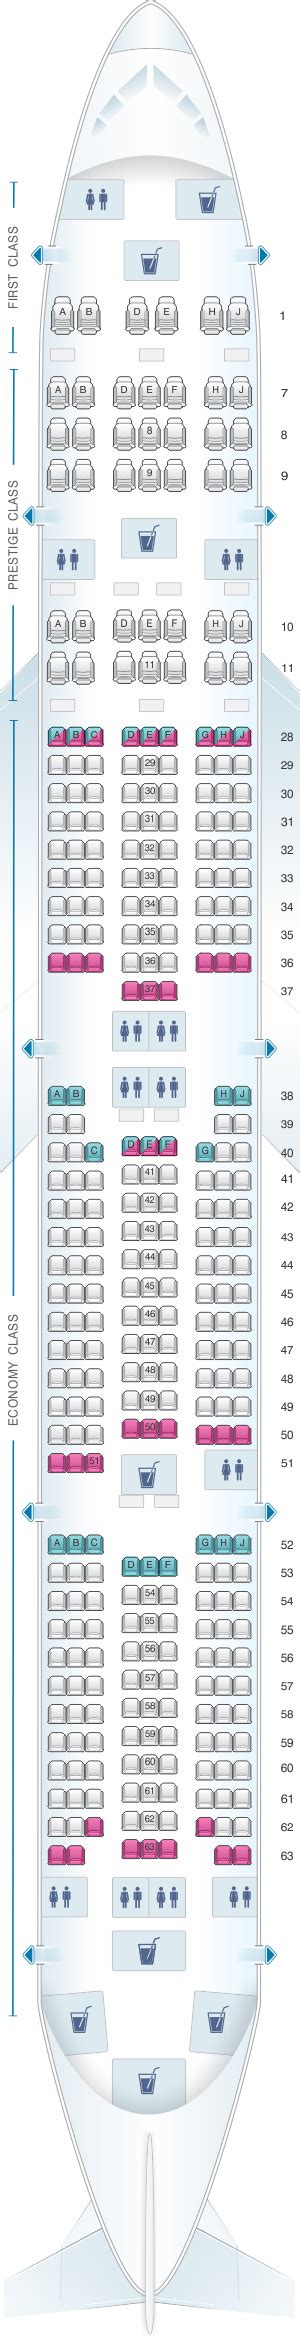 Seat Map Korean Air Boeing B777 300 338pax Seatmaestro